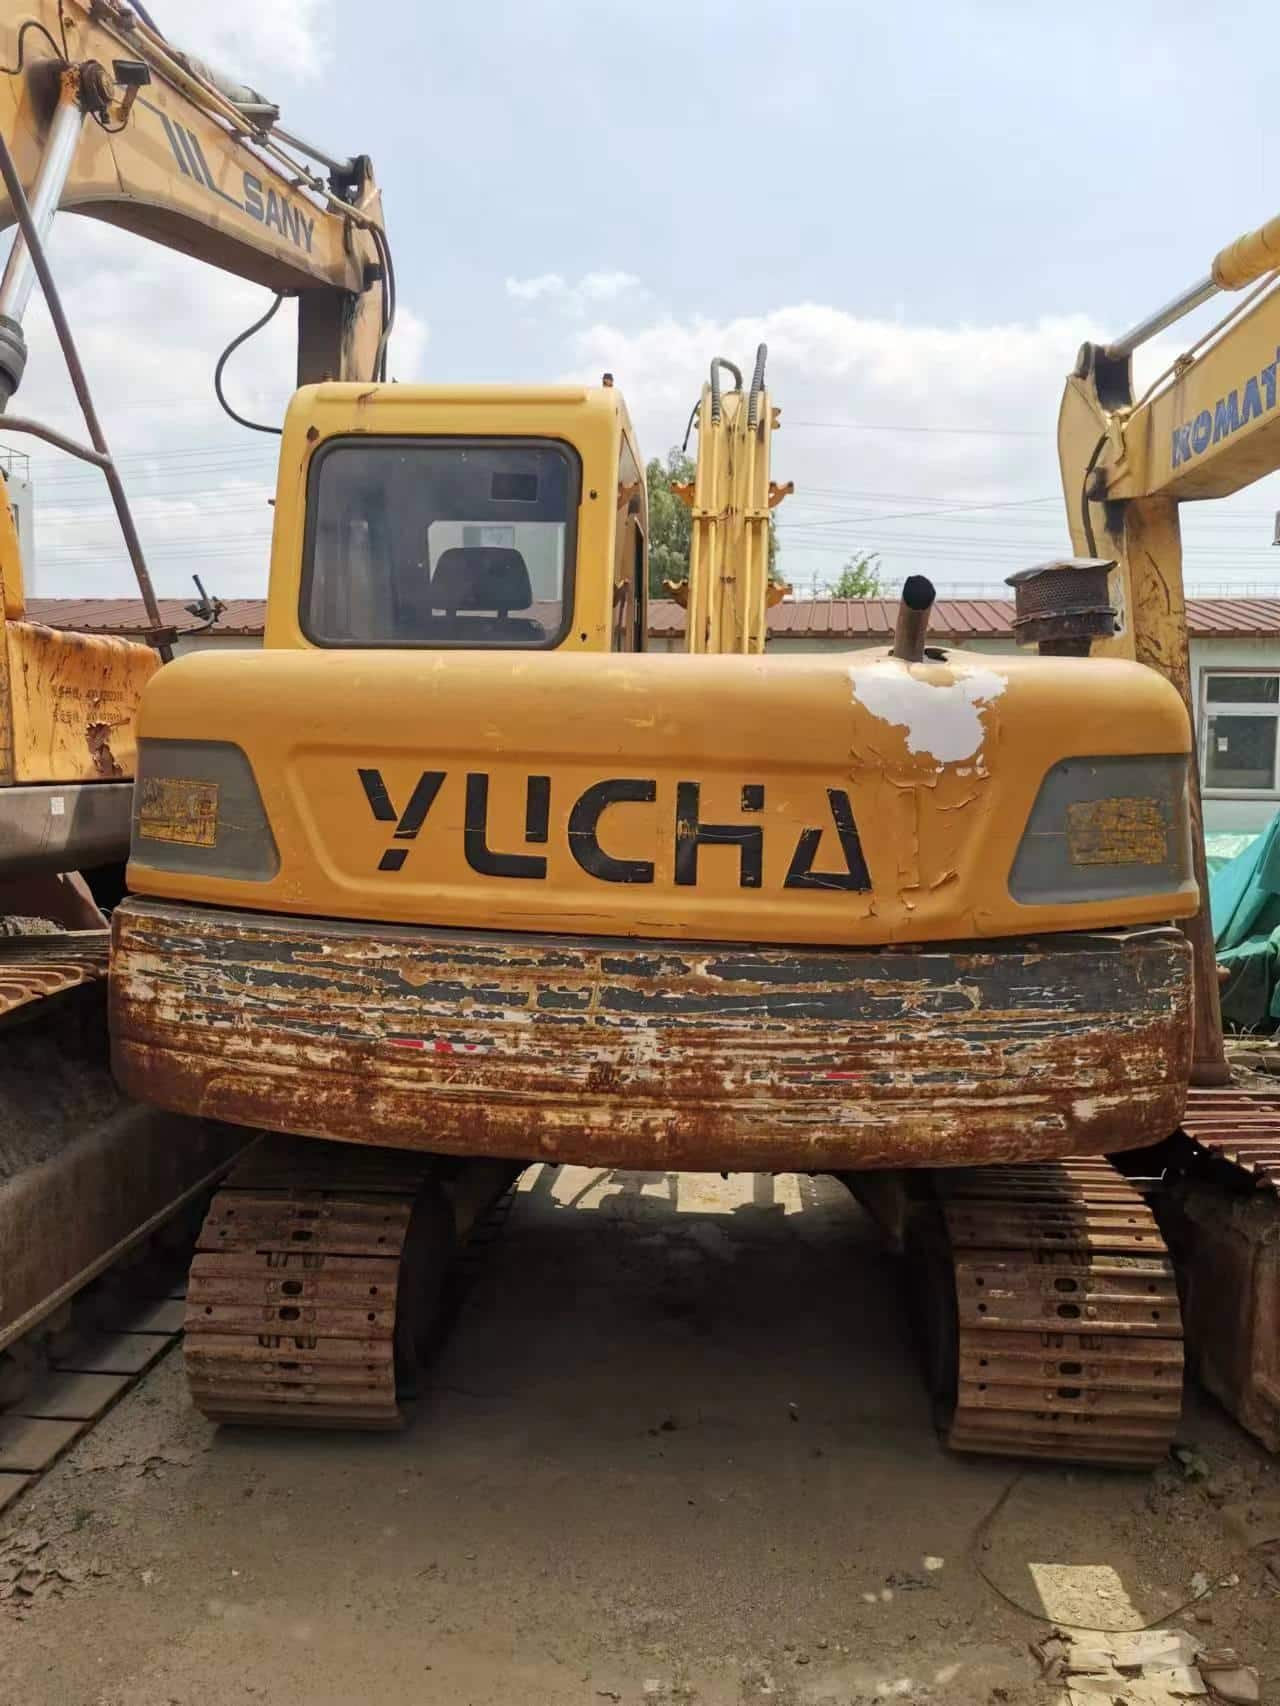 Yuchai YC85 crawler excavator